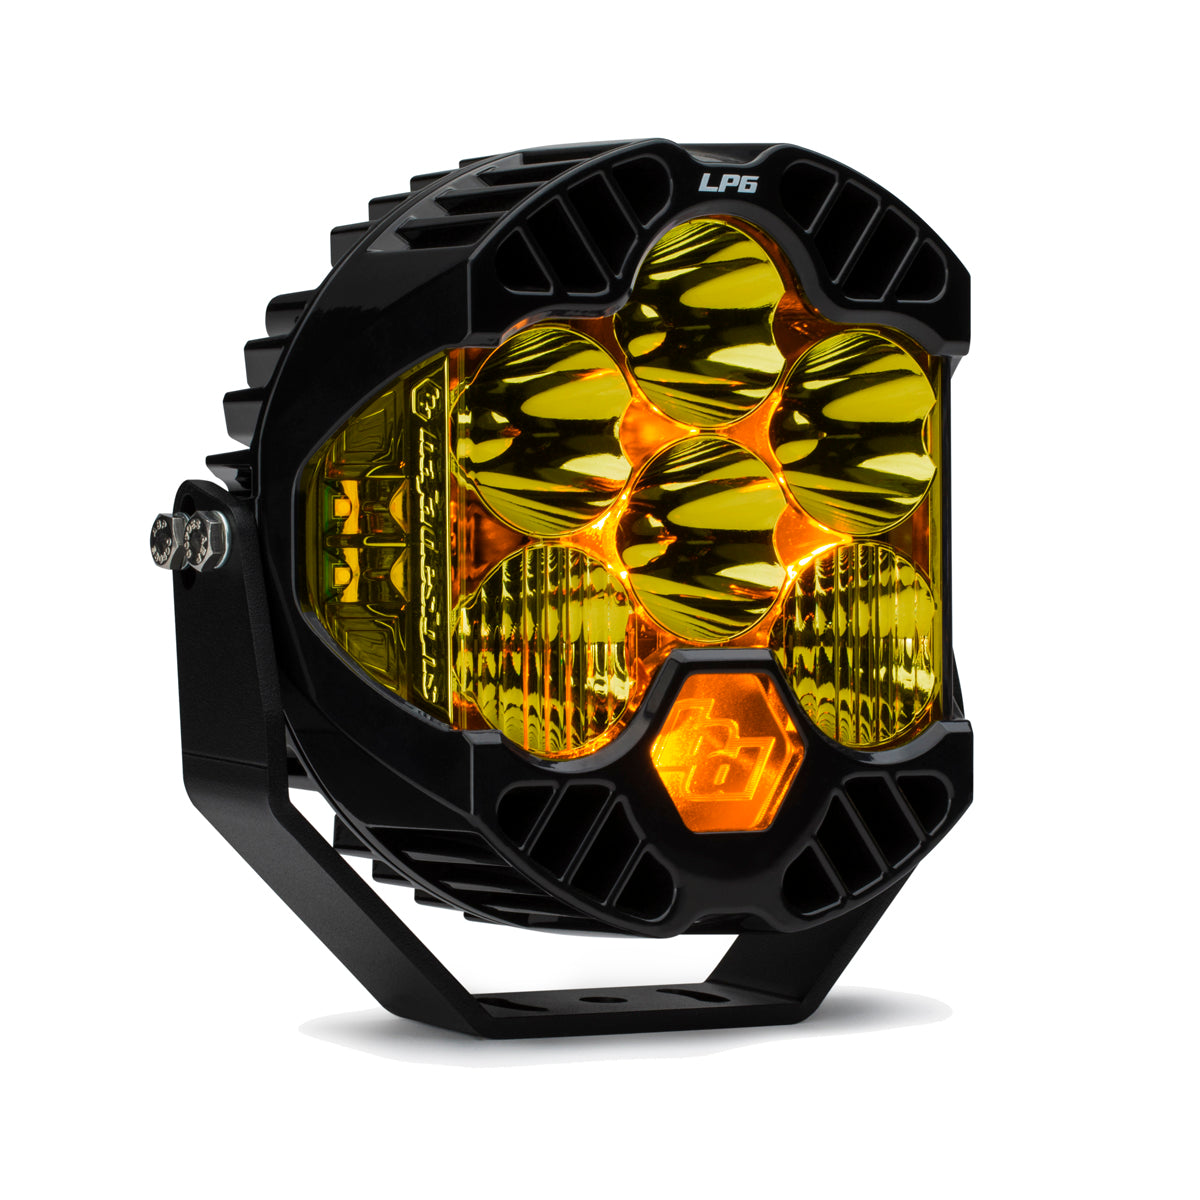 Baja Designs LP6 Pro LED light in Amber